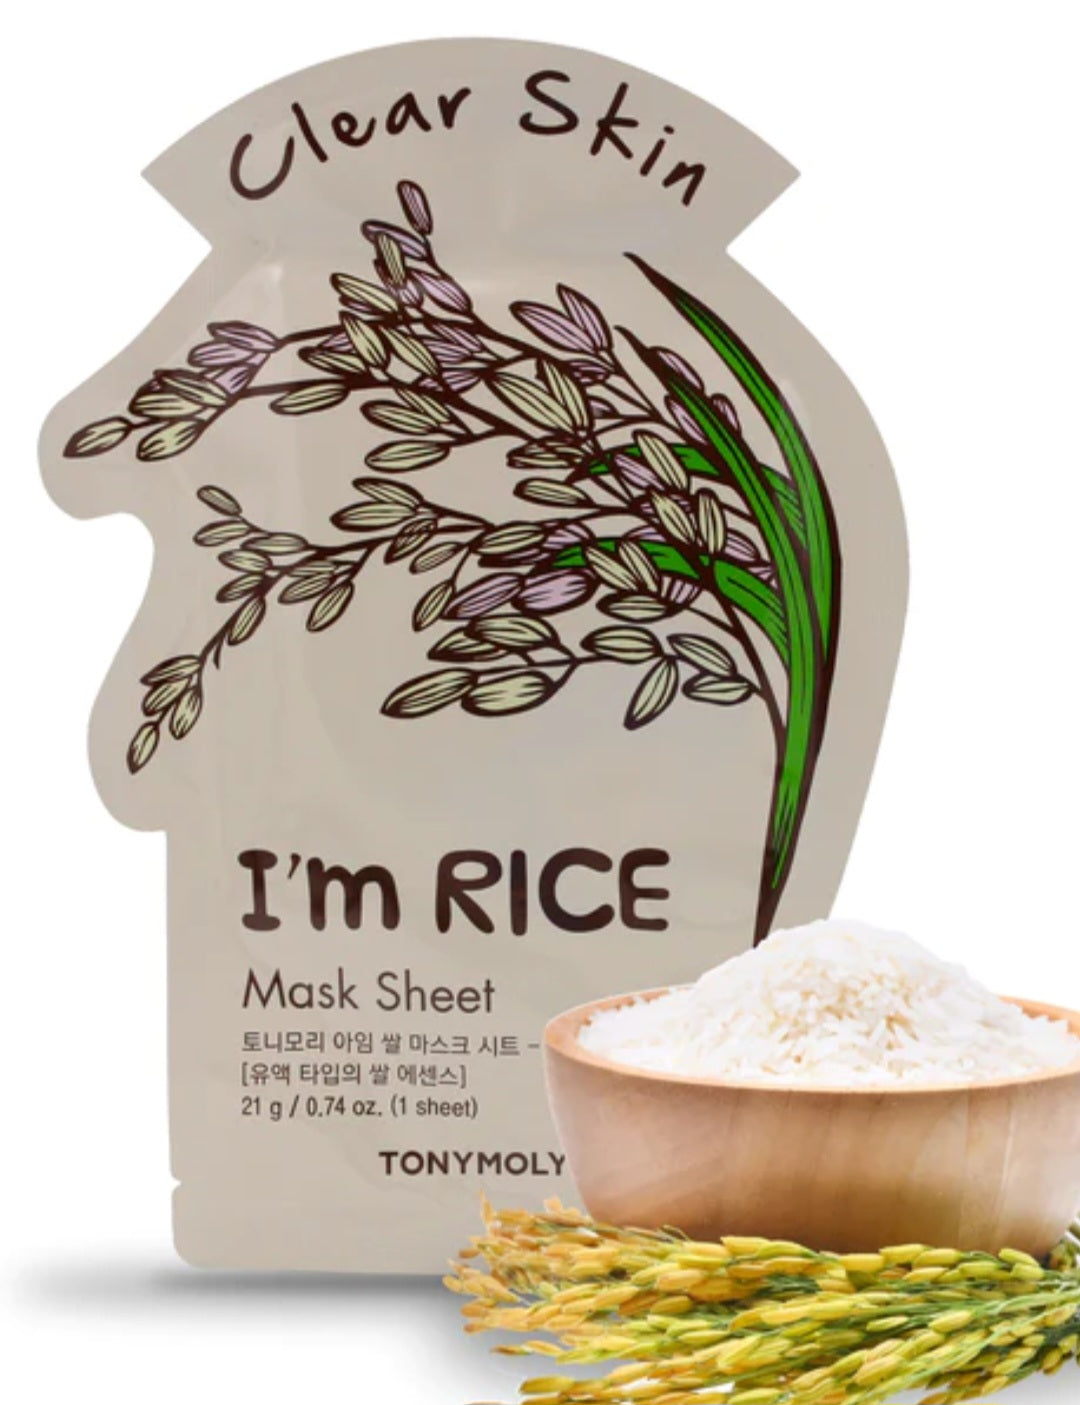 Tony Moly
I'm Rice, Clear Skin Beauty Mask Sheet, 1 Sheet, 0.74 oz (21 g)